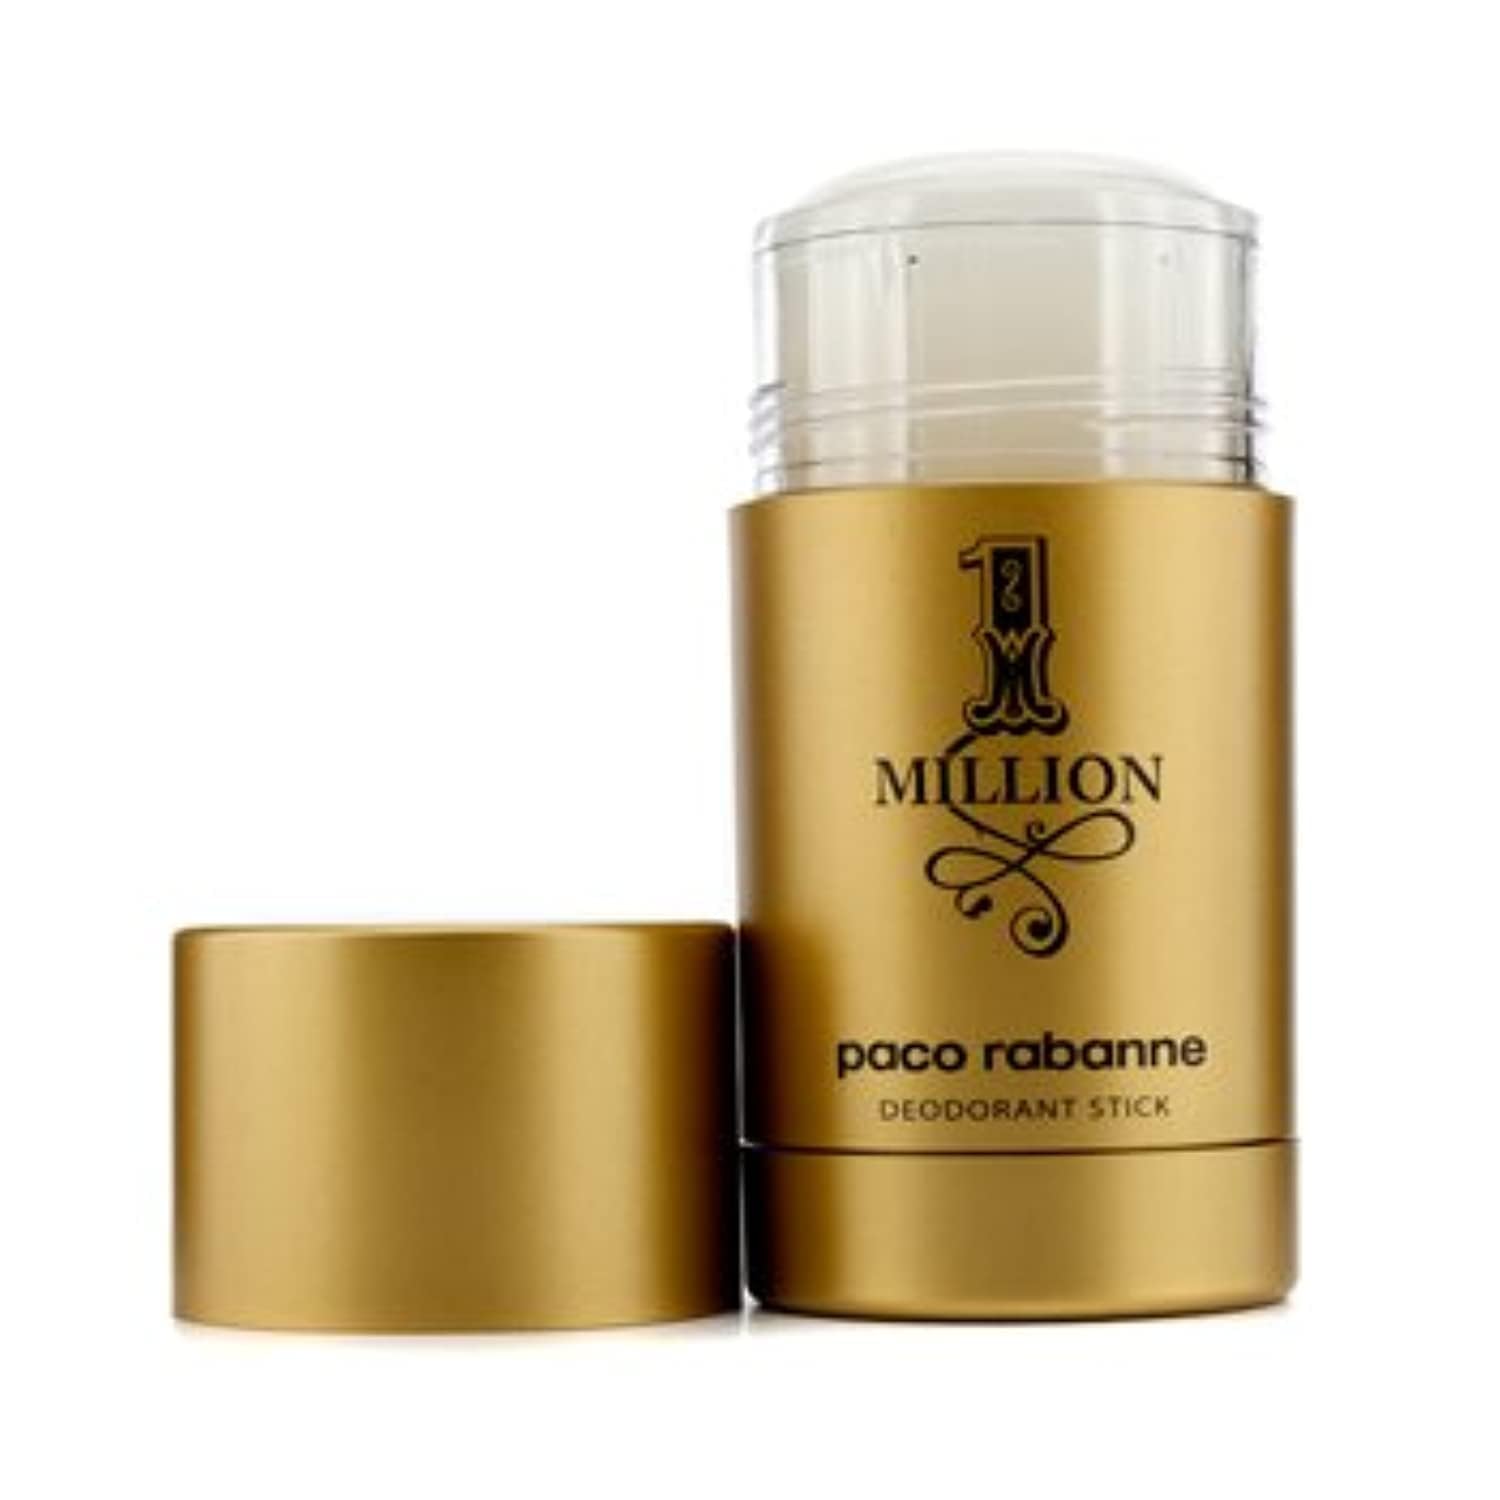 Paco Rabanne 1 Million Deo Stick | My Perfume Shop Australia